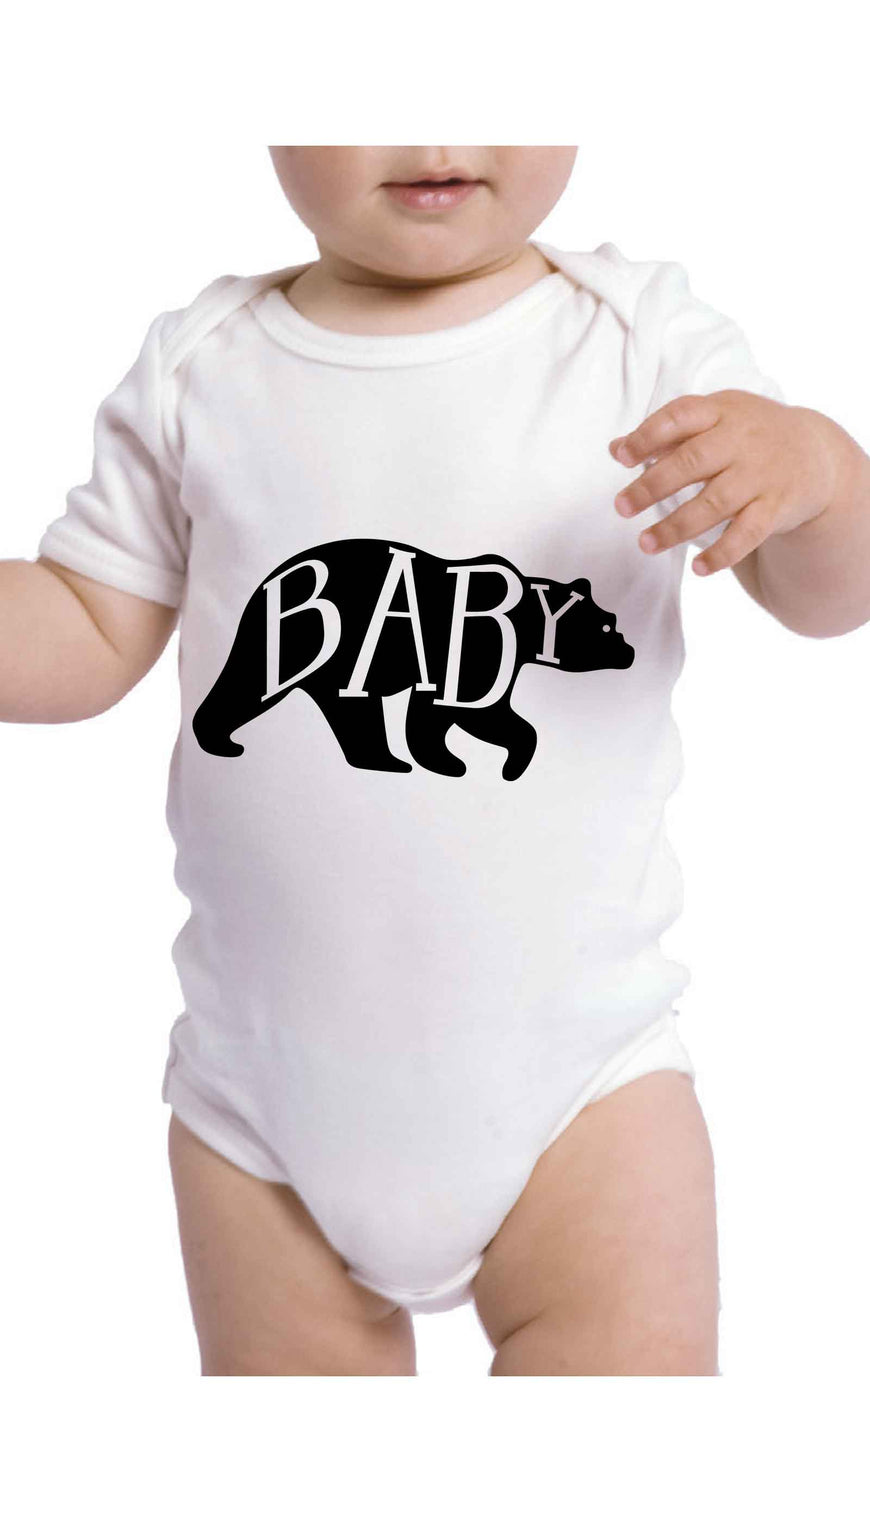 Baby Bear Cute & Funny Baby Infant Onesie